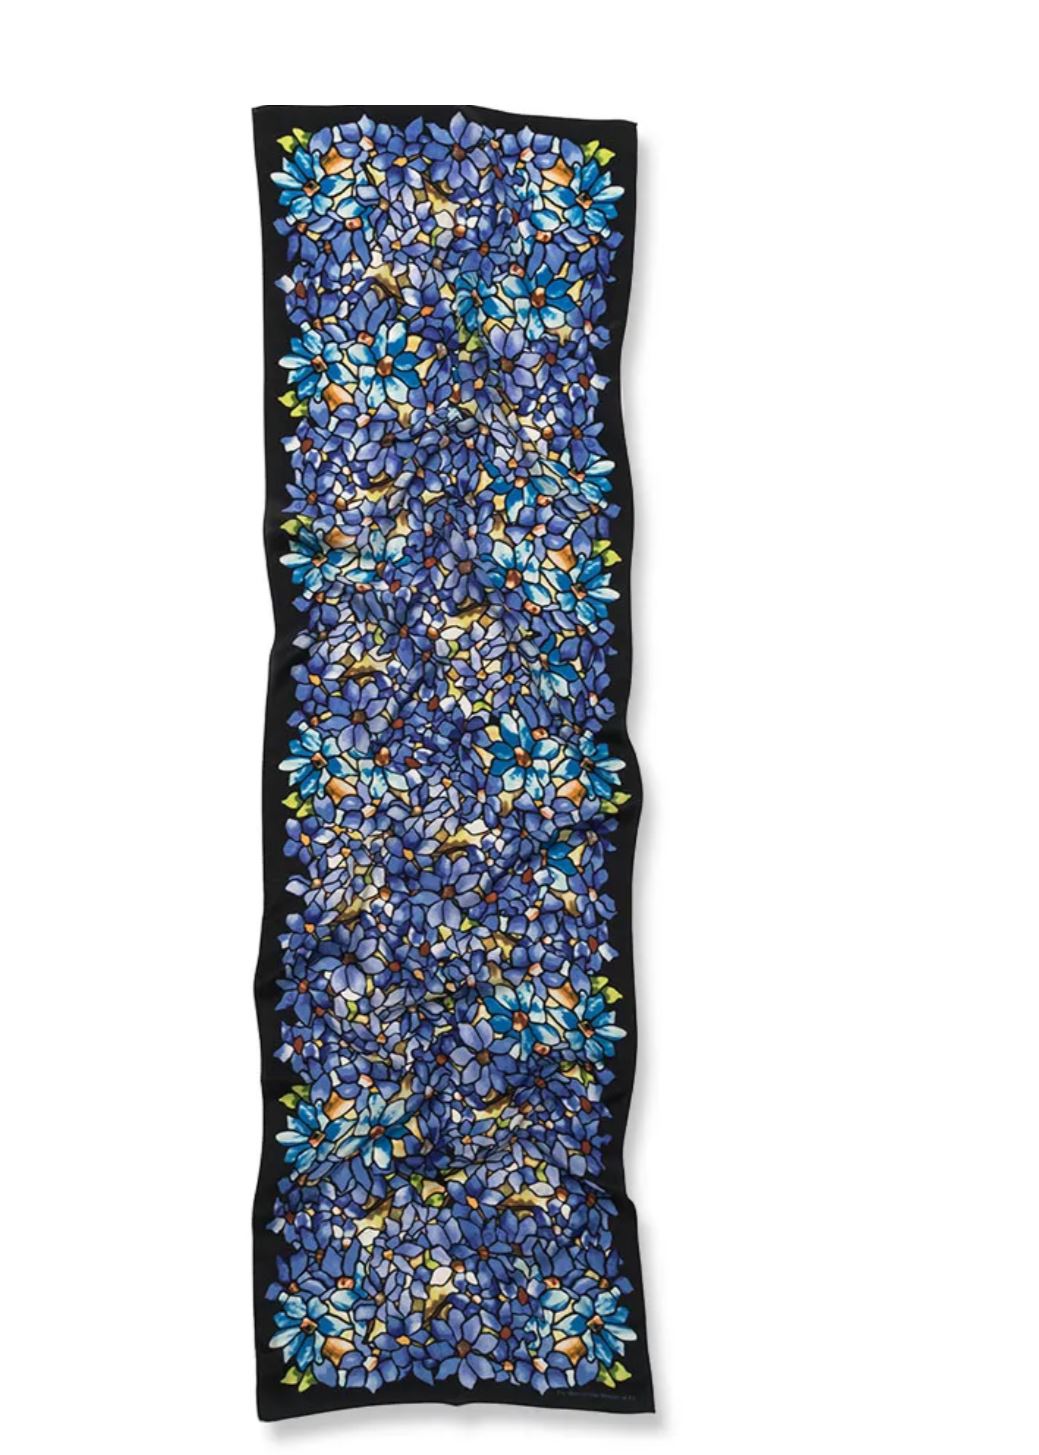 MMA Louis Tiffany, Clematis Oblong Silk Scarf, Metropolitan Museum of Art